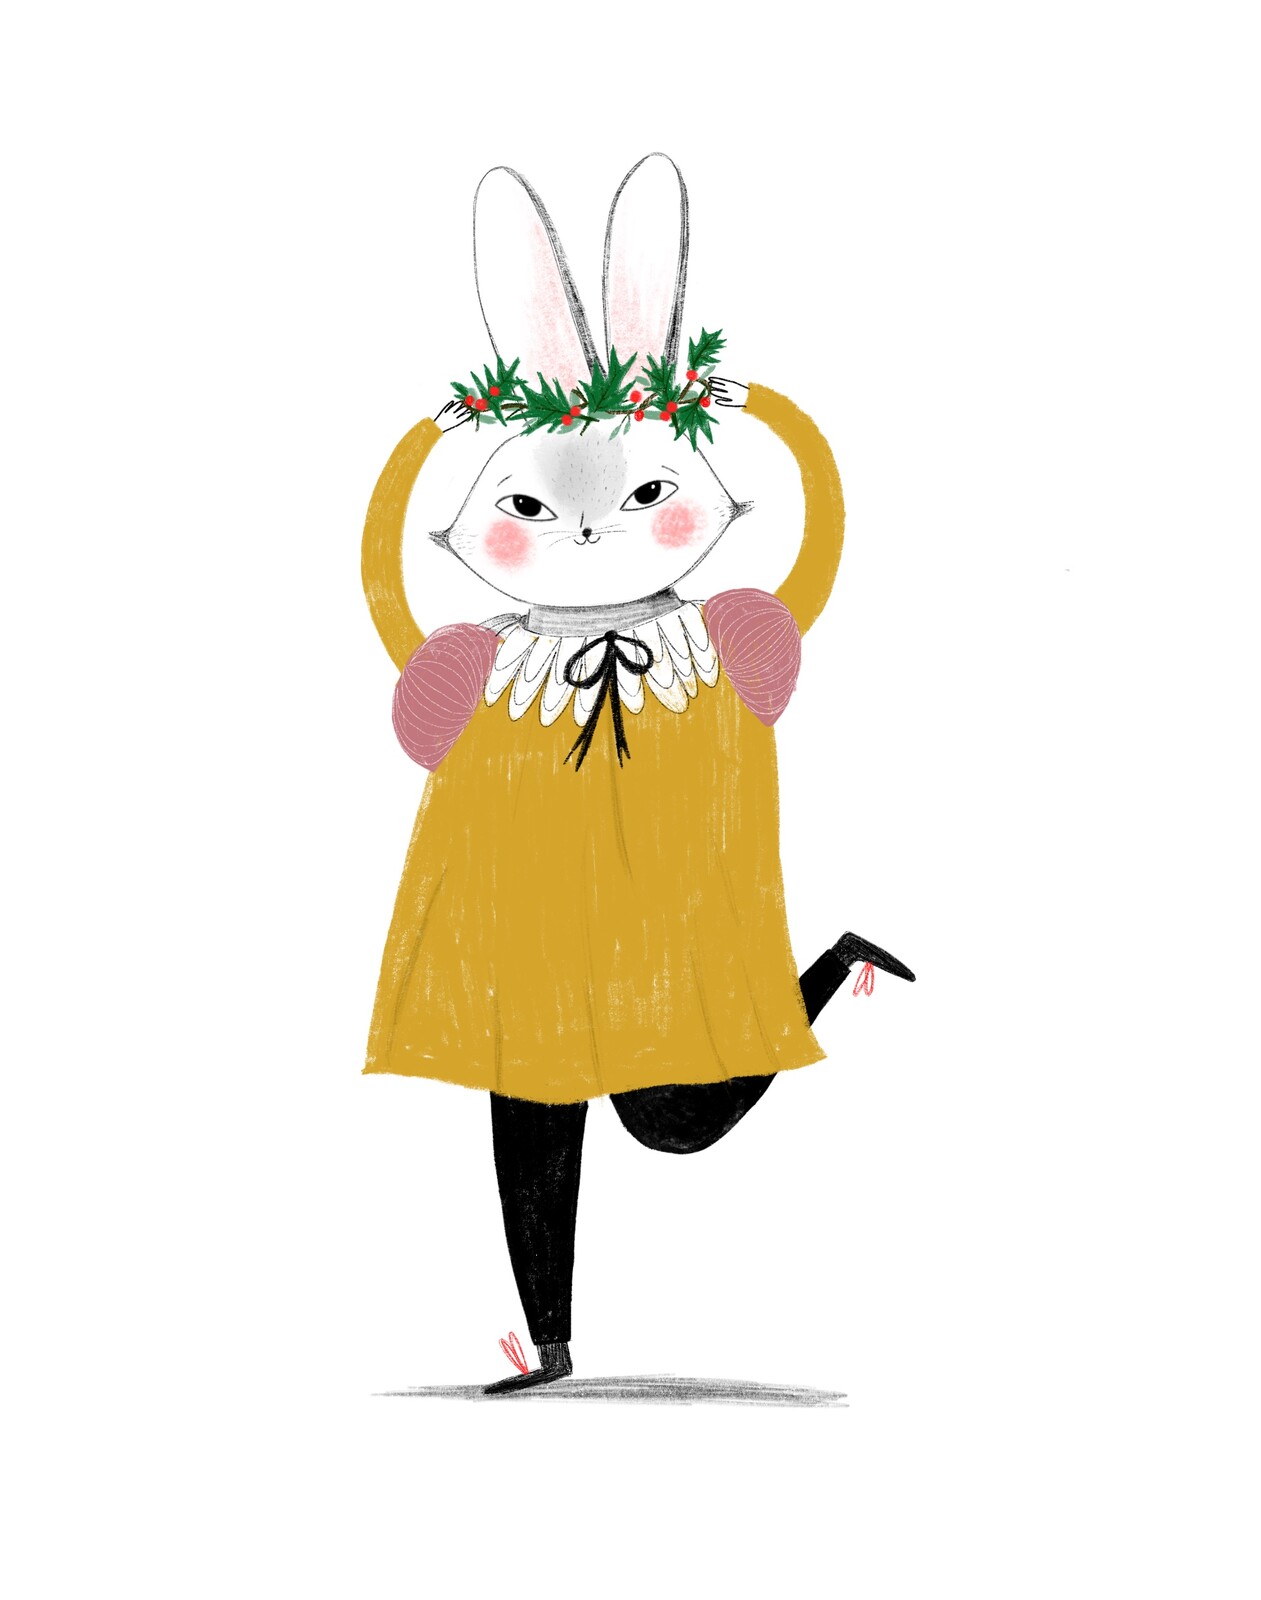 Lady rabbit in yellow dress